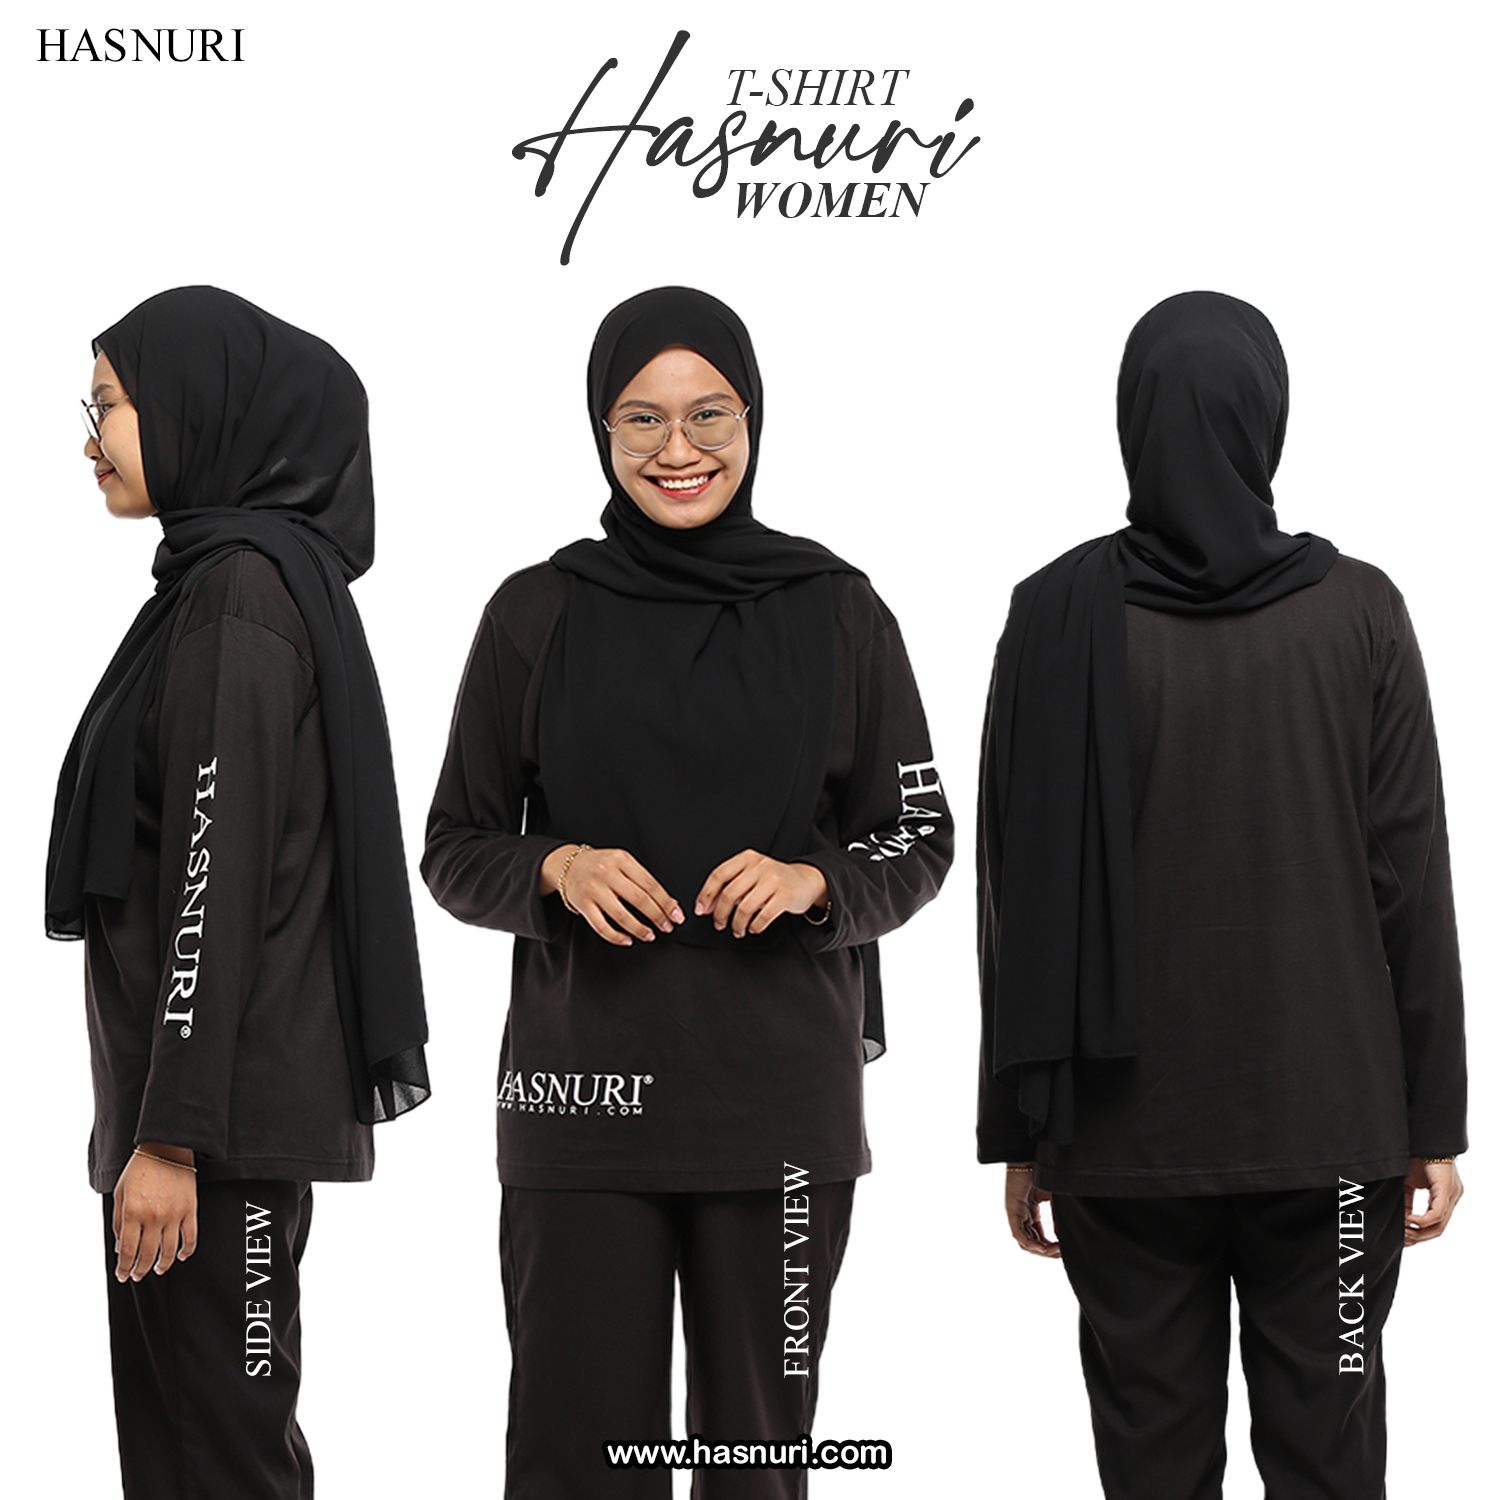 T-shirt Hasnuri Women - Black